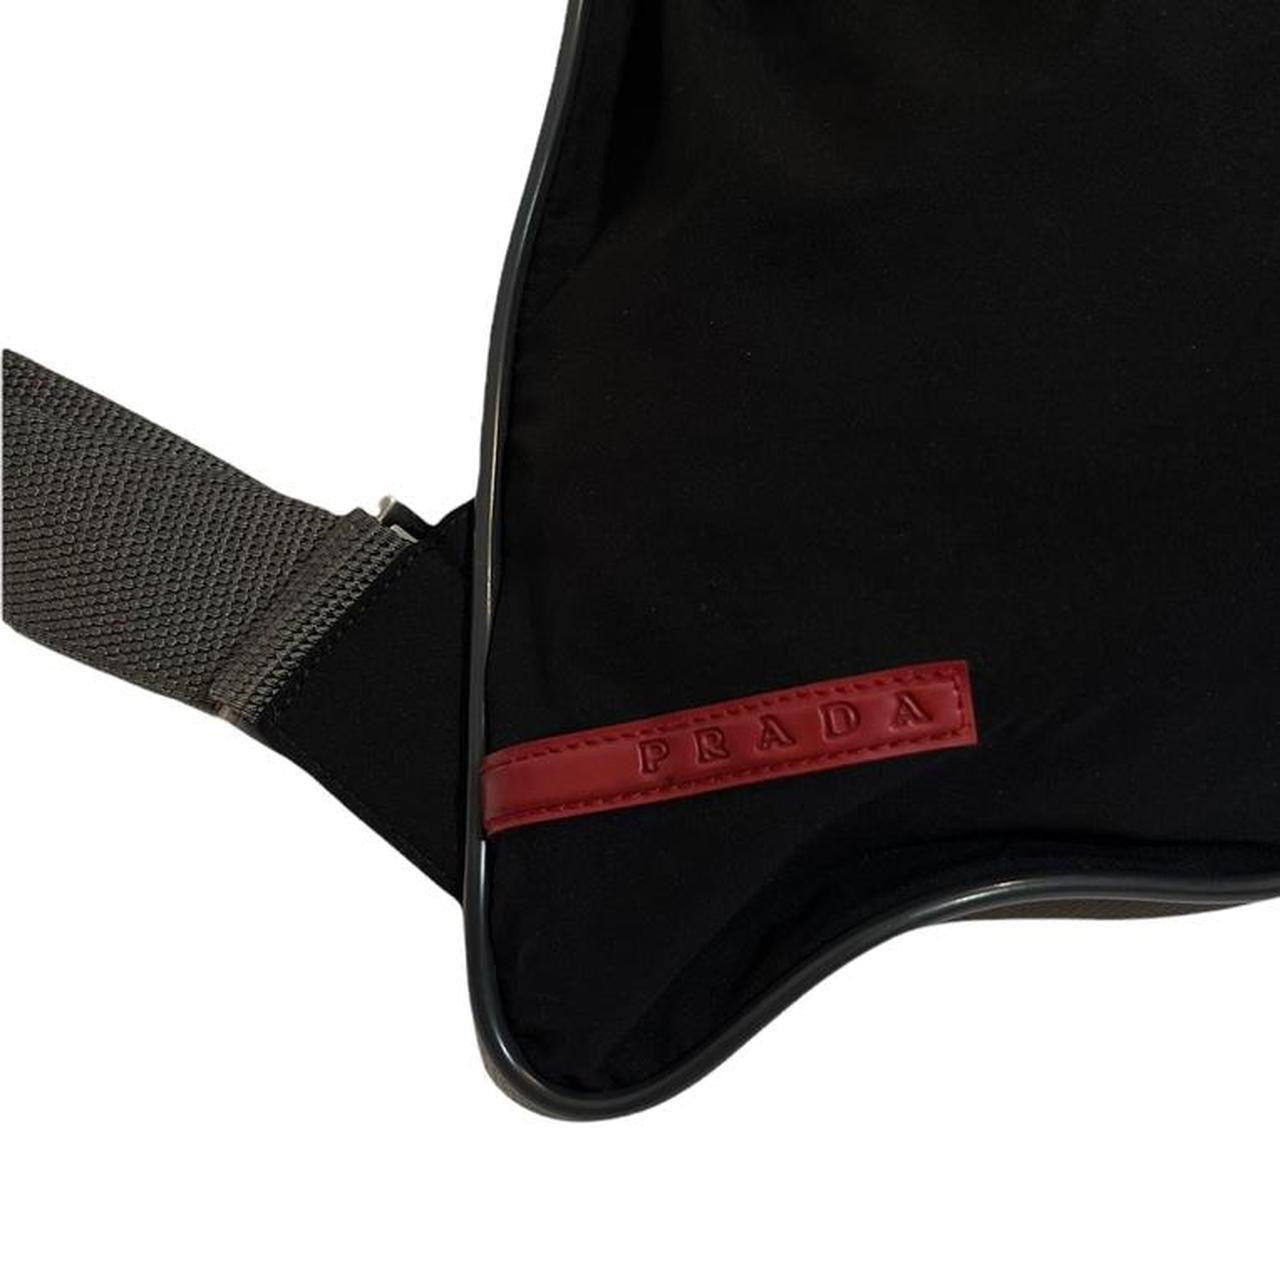 Prada Sport Black Backpack - Known Source